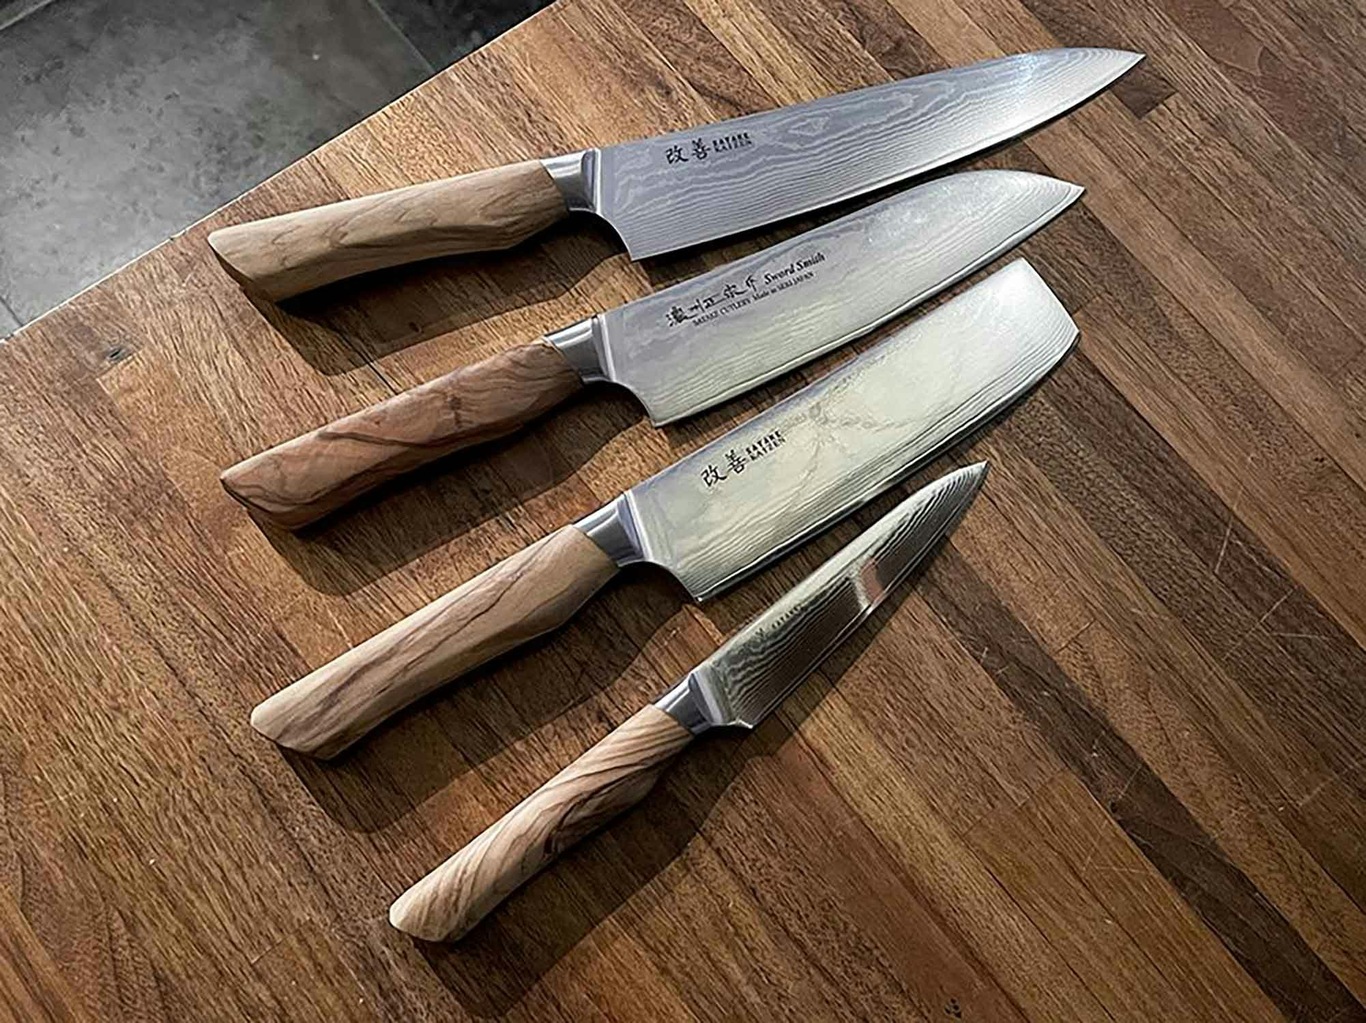 https://royaldesign.com/image/2/satake-satake-kaizen-nakiri-vegetable-knife-16cm-1?w=800&quality=80